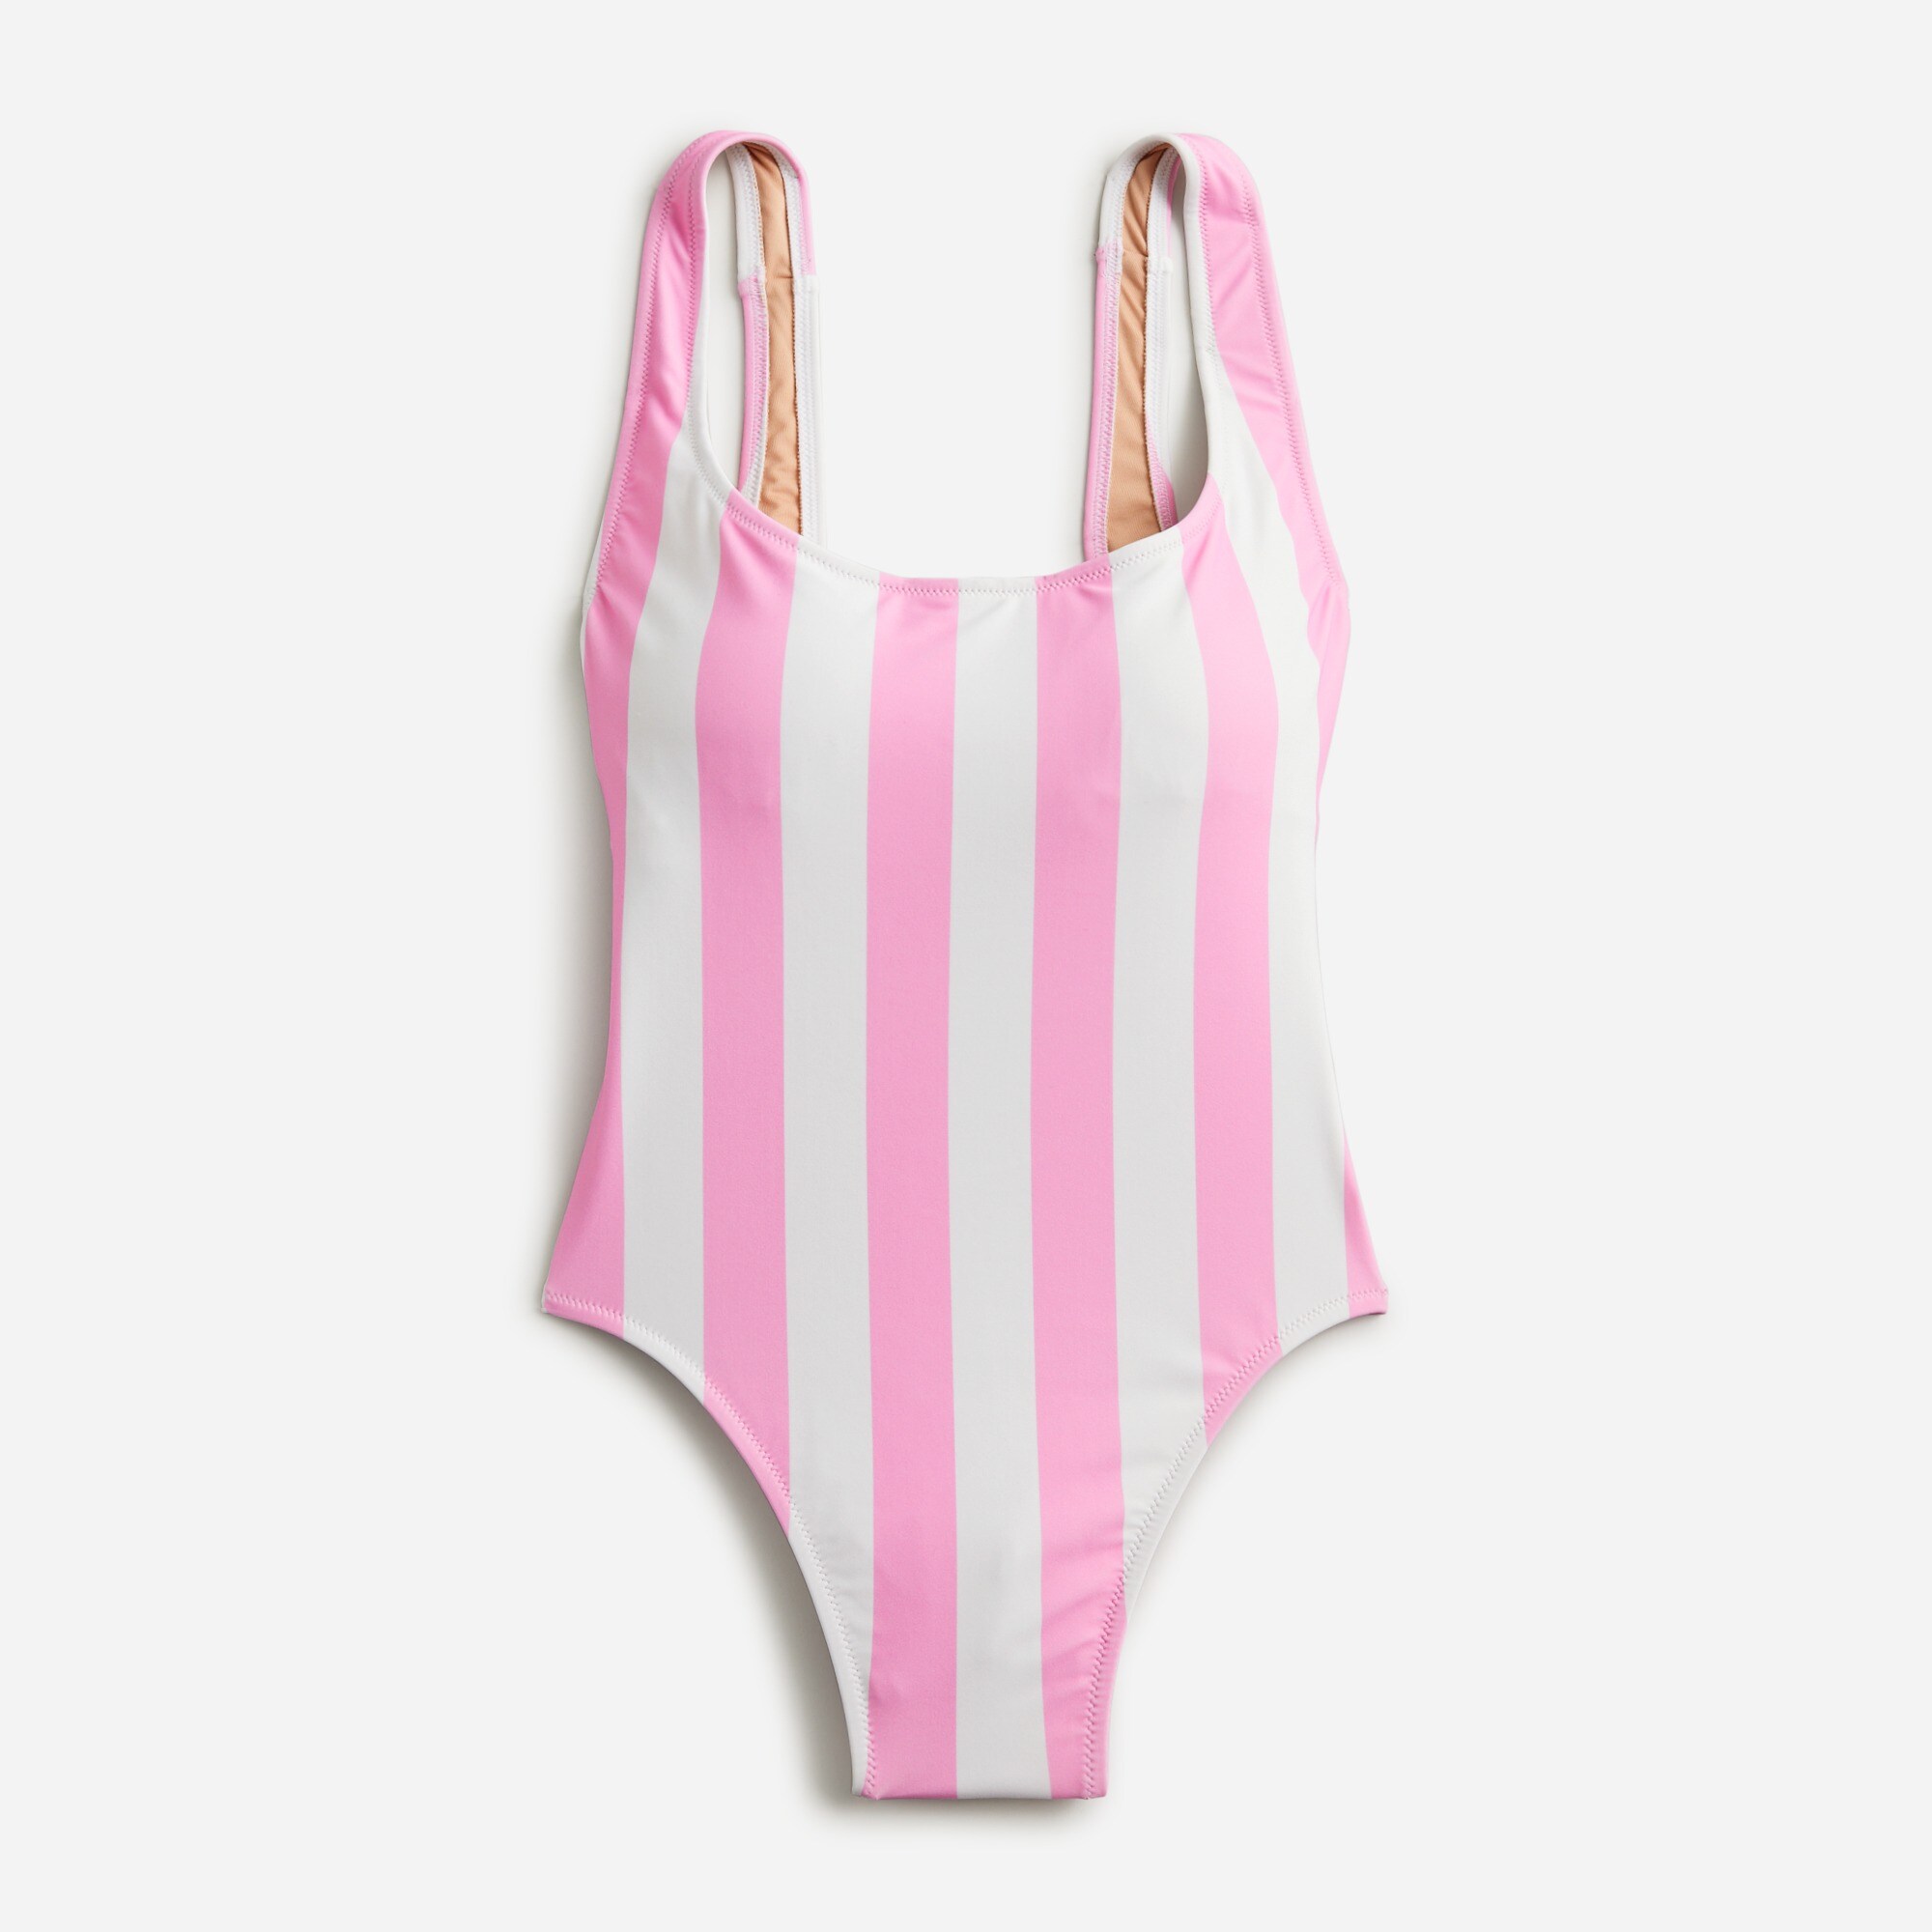  Scoopneck one-piece swimsuit in pink stripe